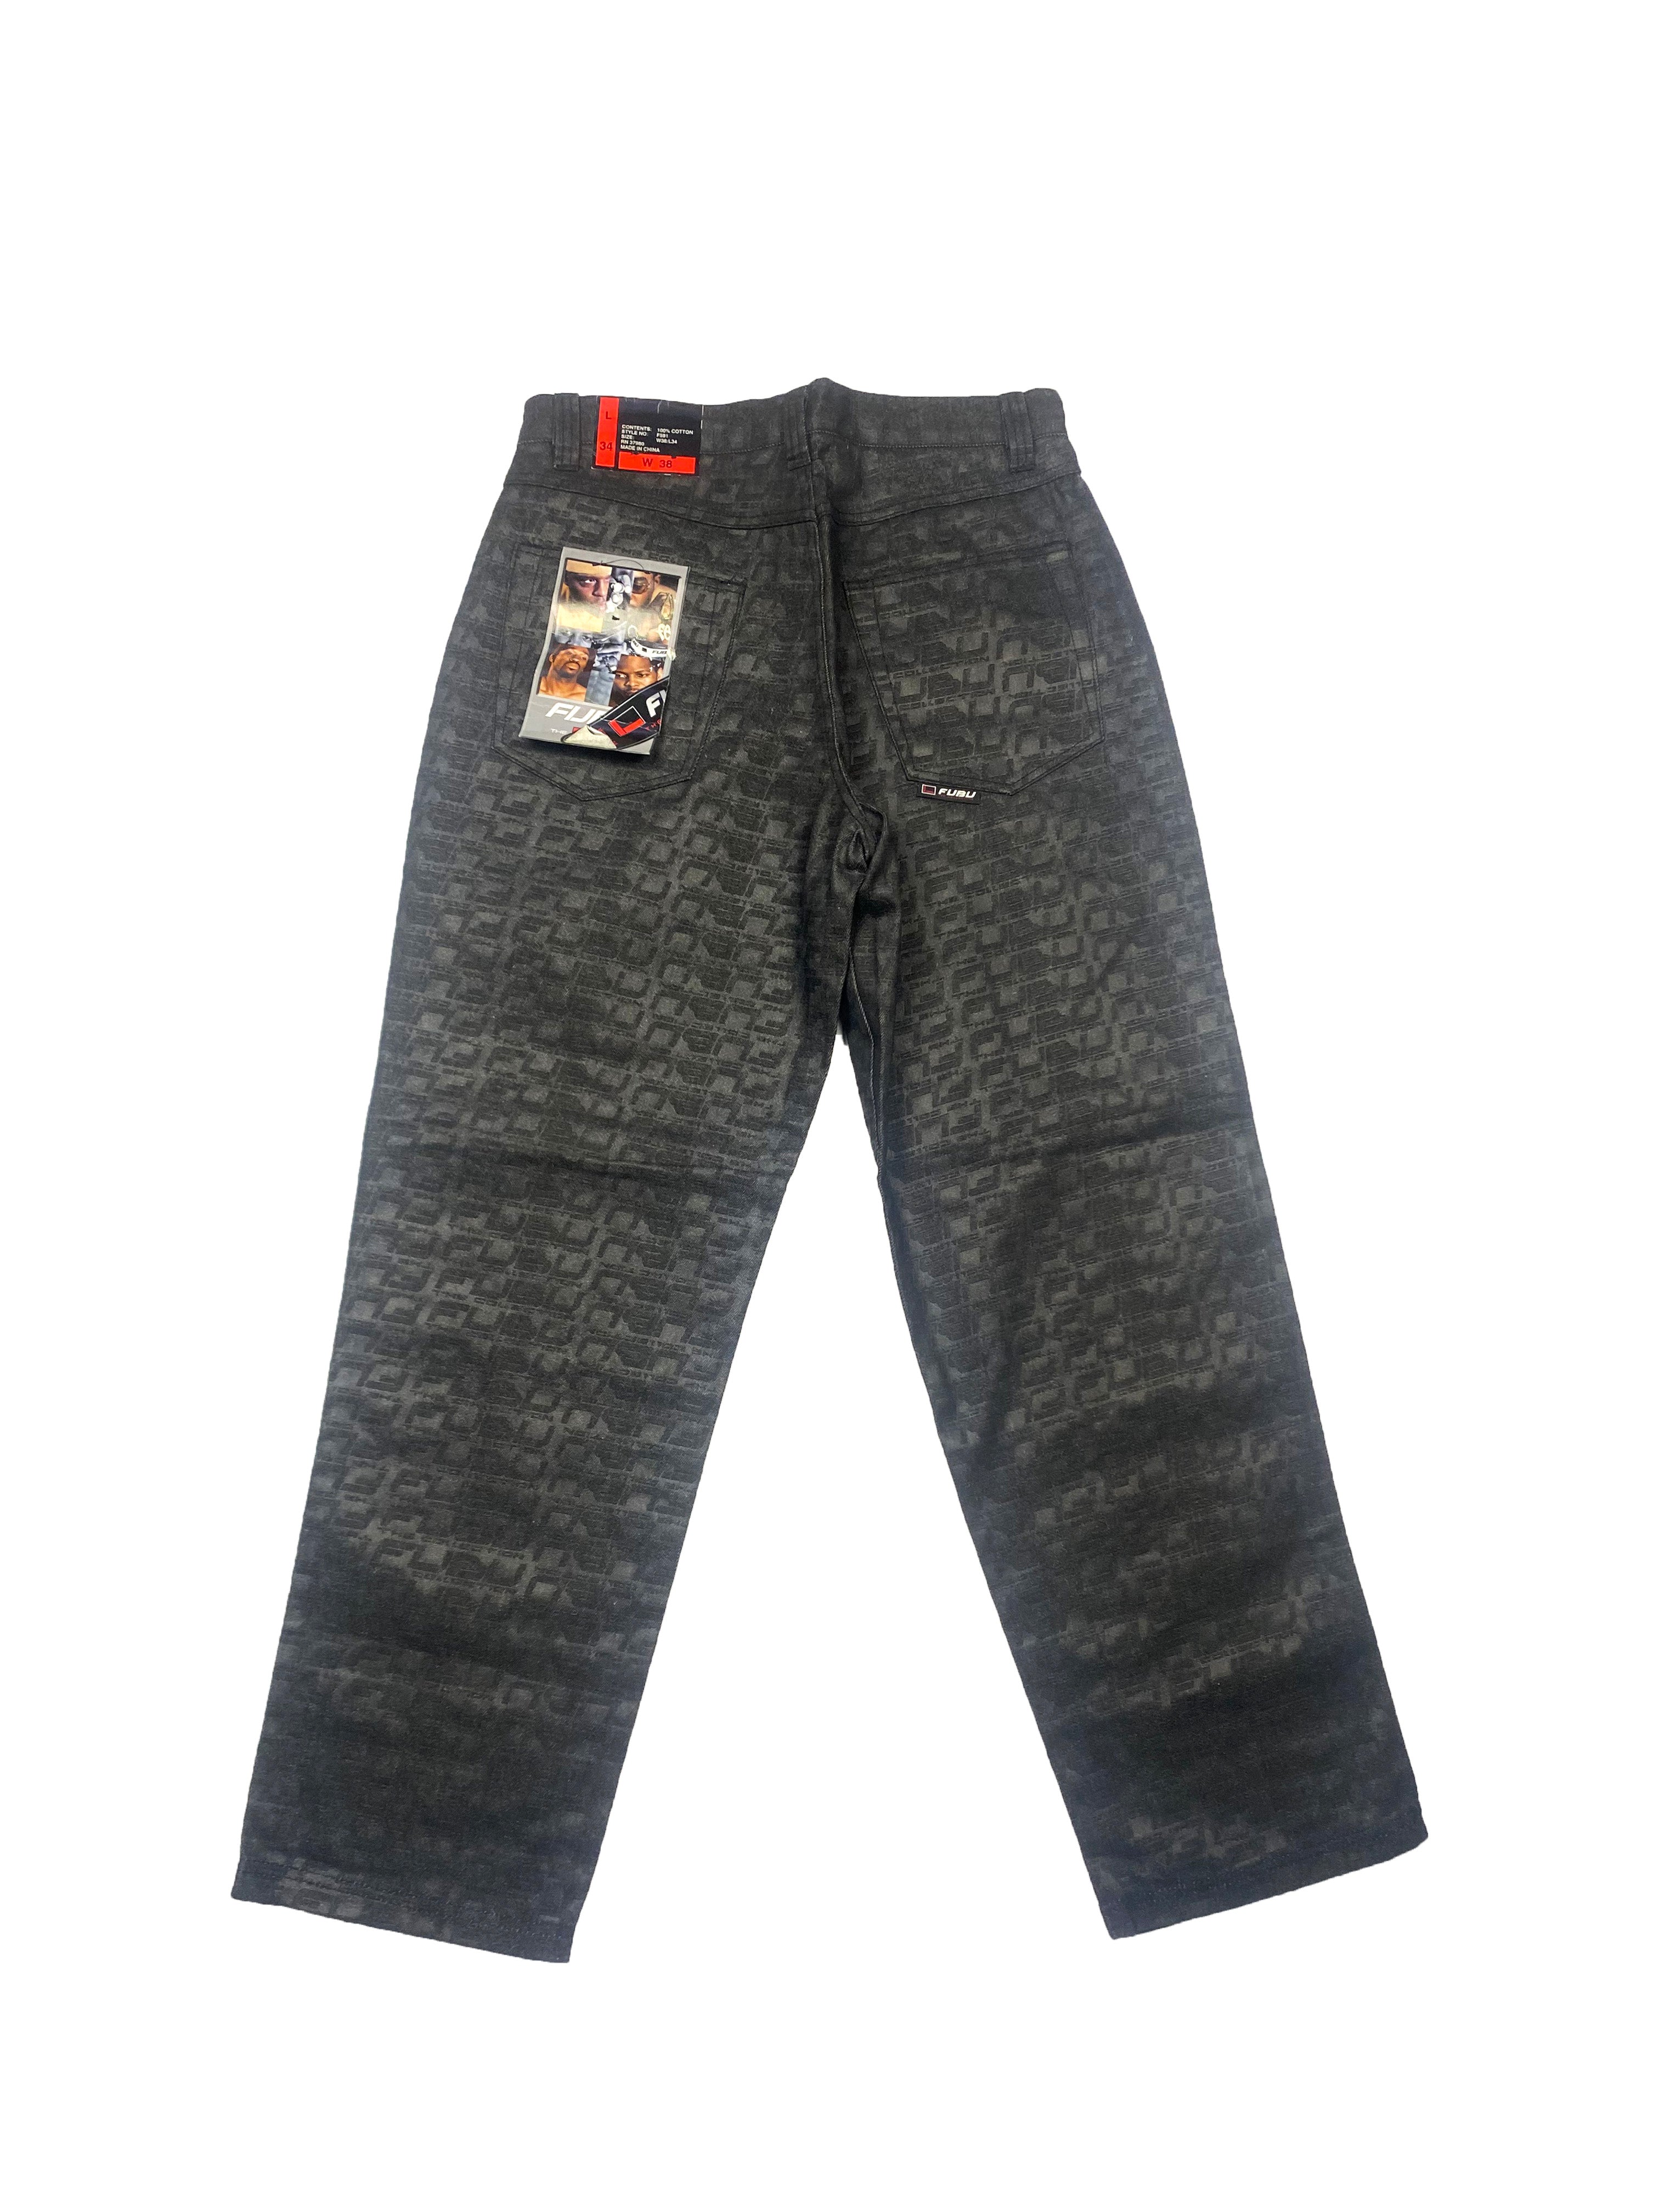 Fubu Black Spell Out Jeans BNWT 90's